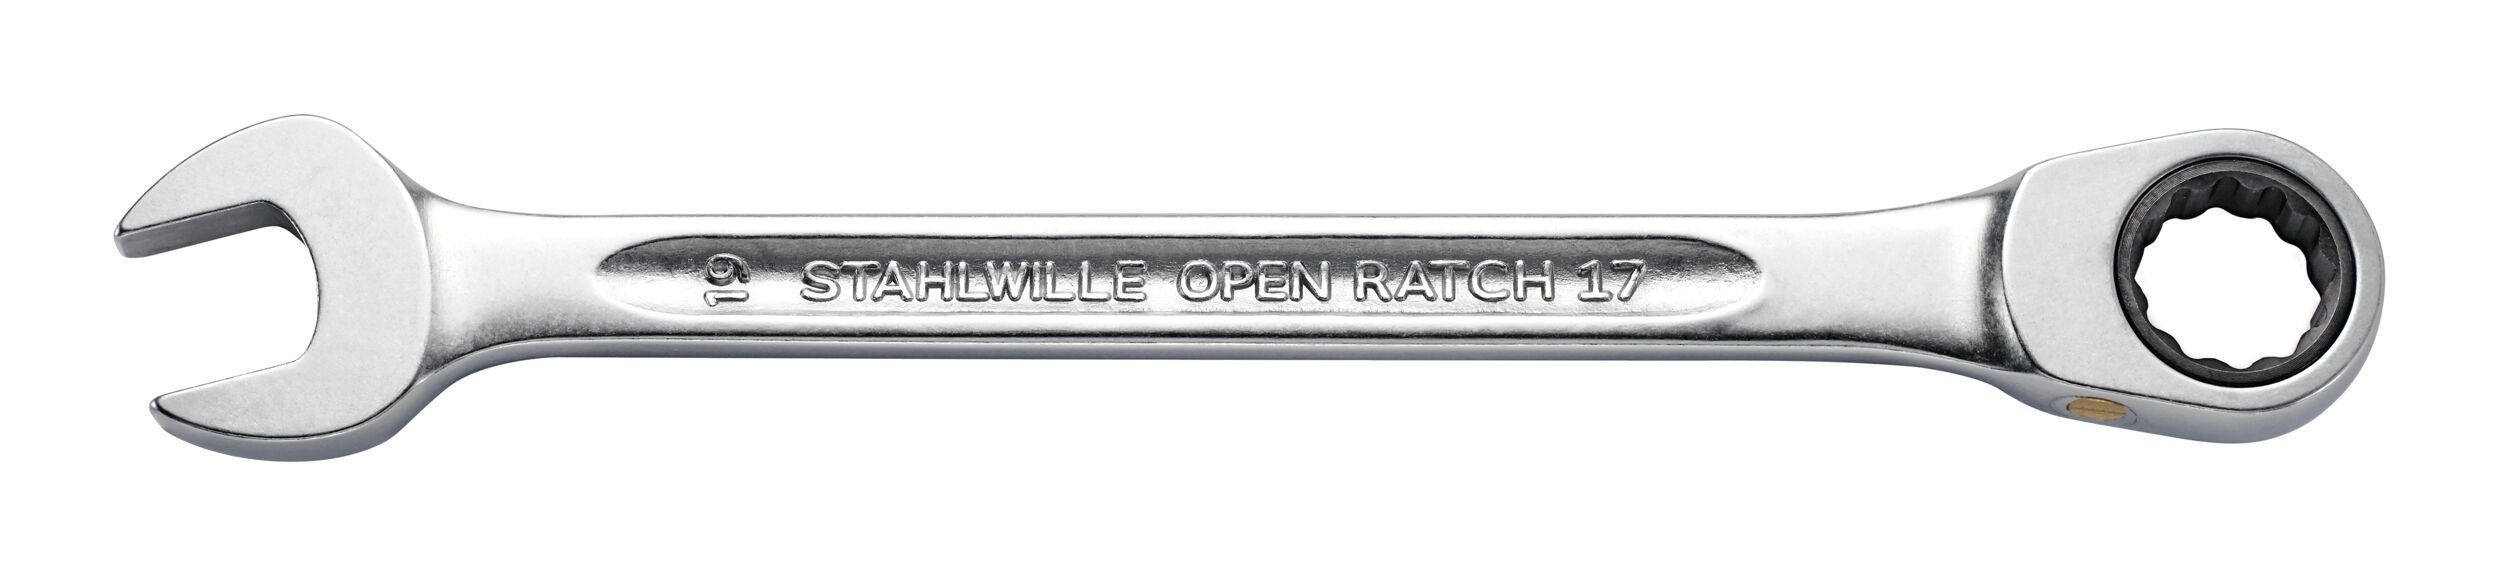 Stahlwille Ratschenringschlüssel, Maul-Ringratschen-Schlüssel gerade 19 mm